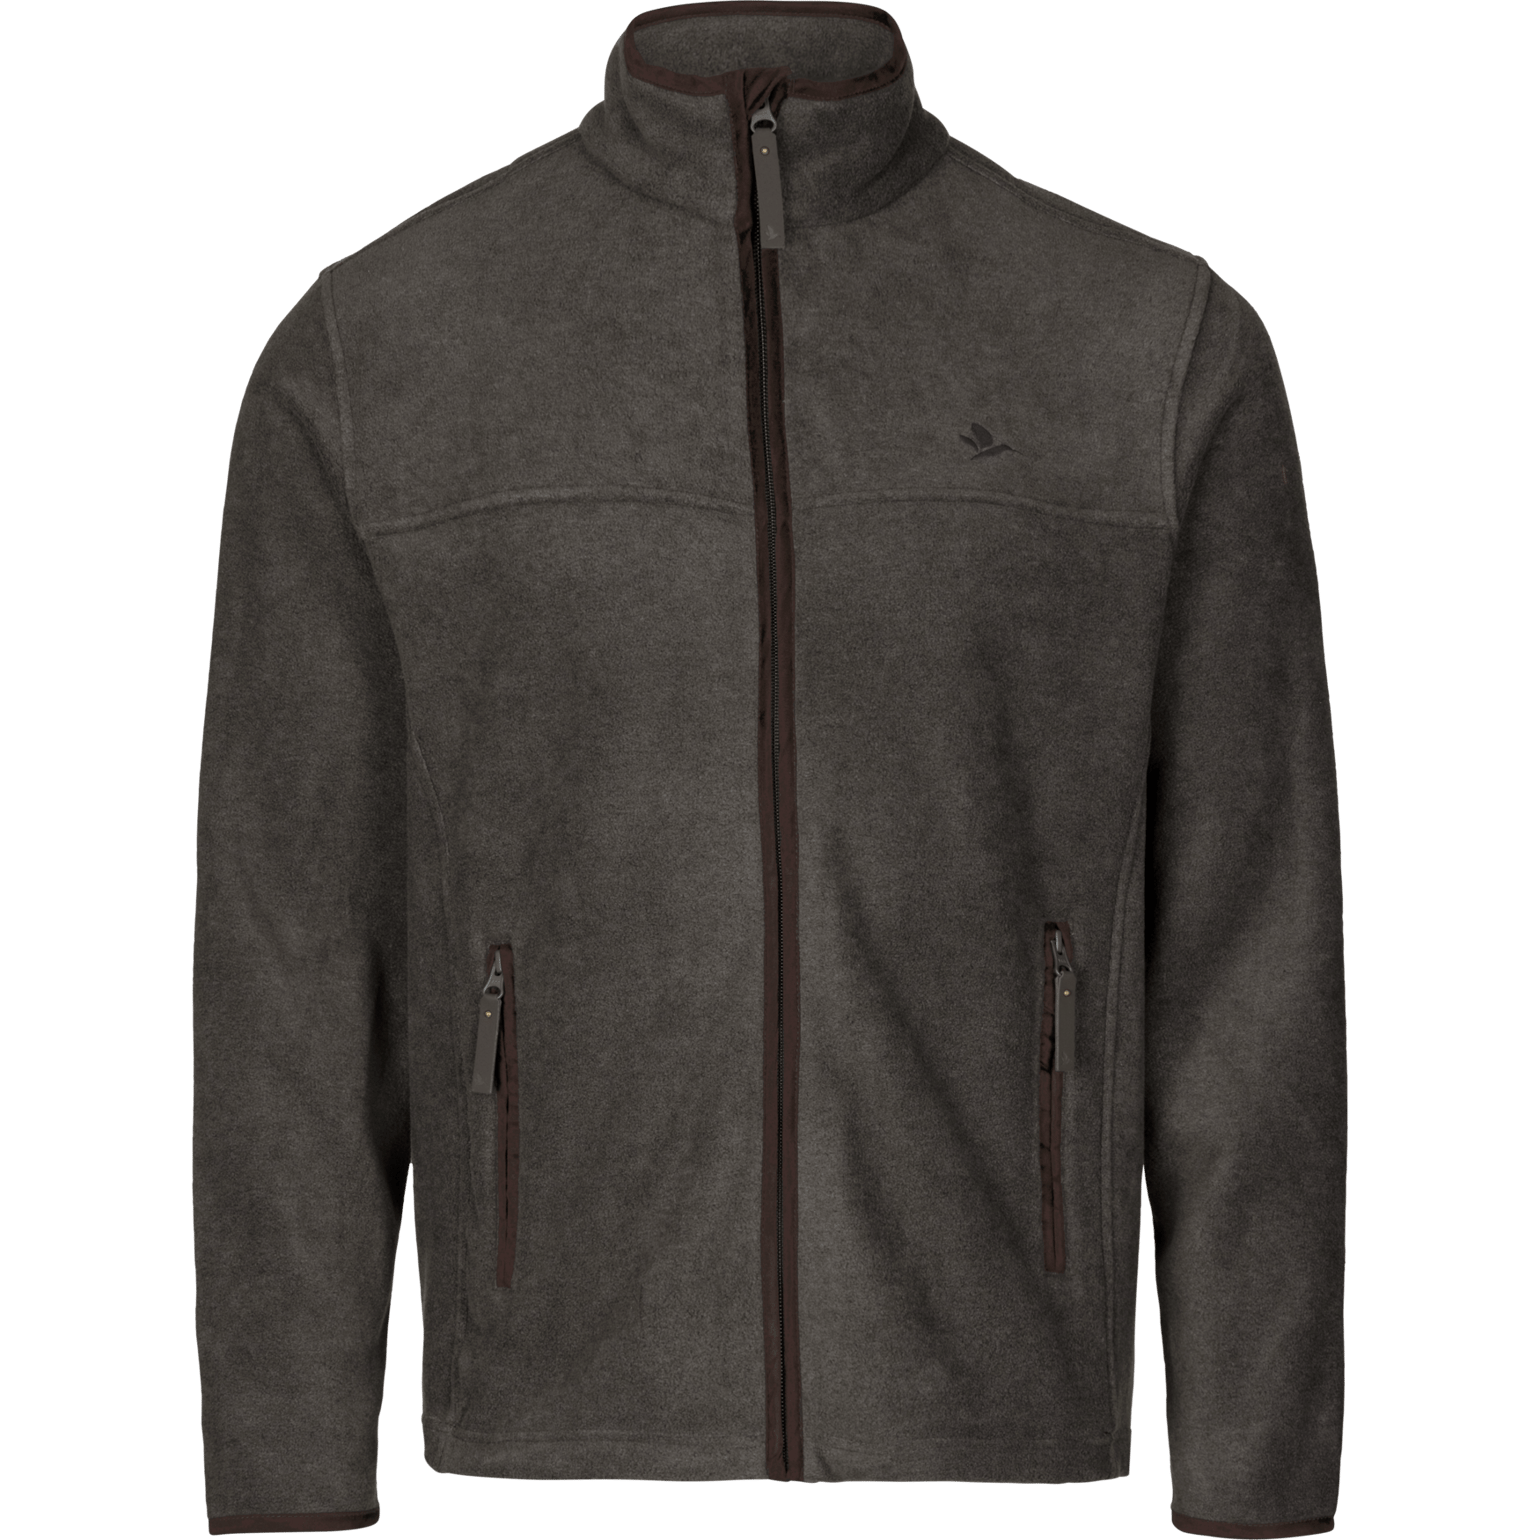 Seeland Men's Woodcock Earl Fleece Jacket Dark Grey Melange